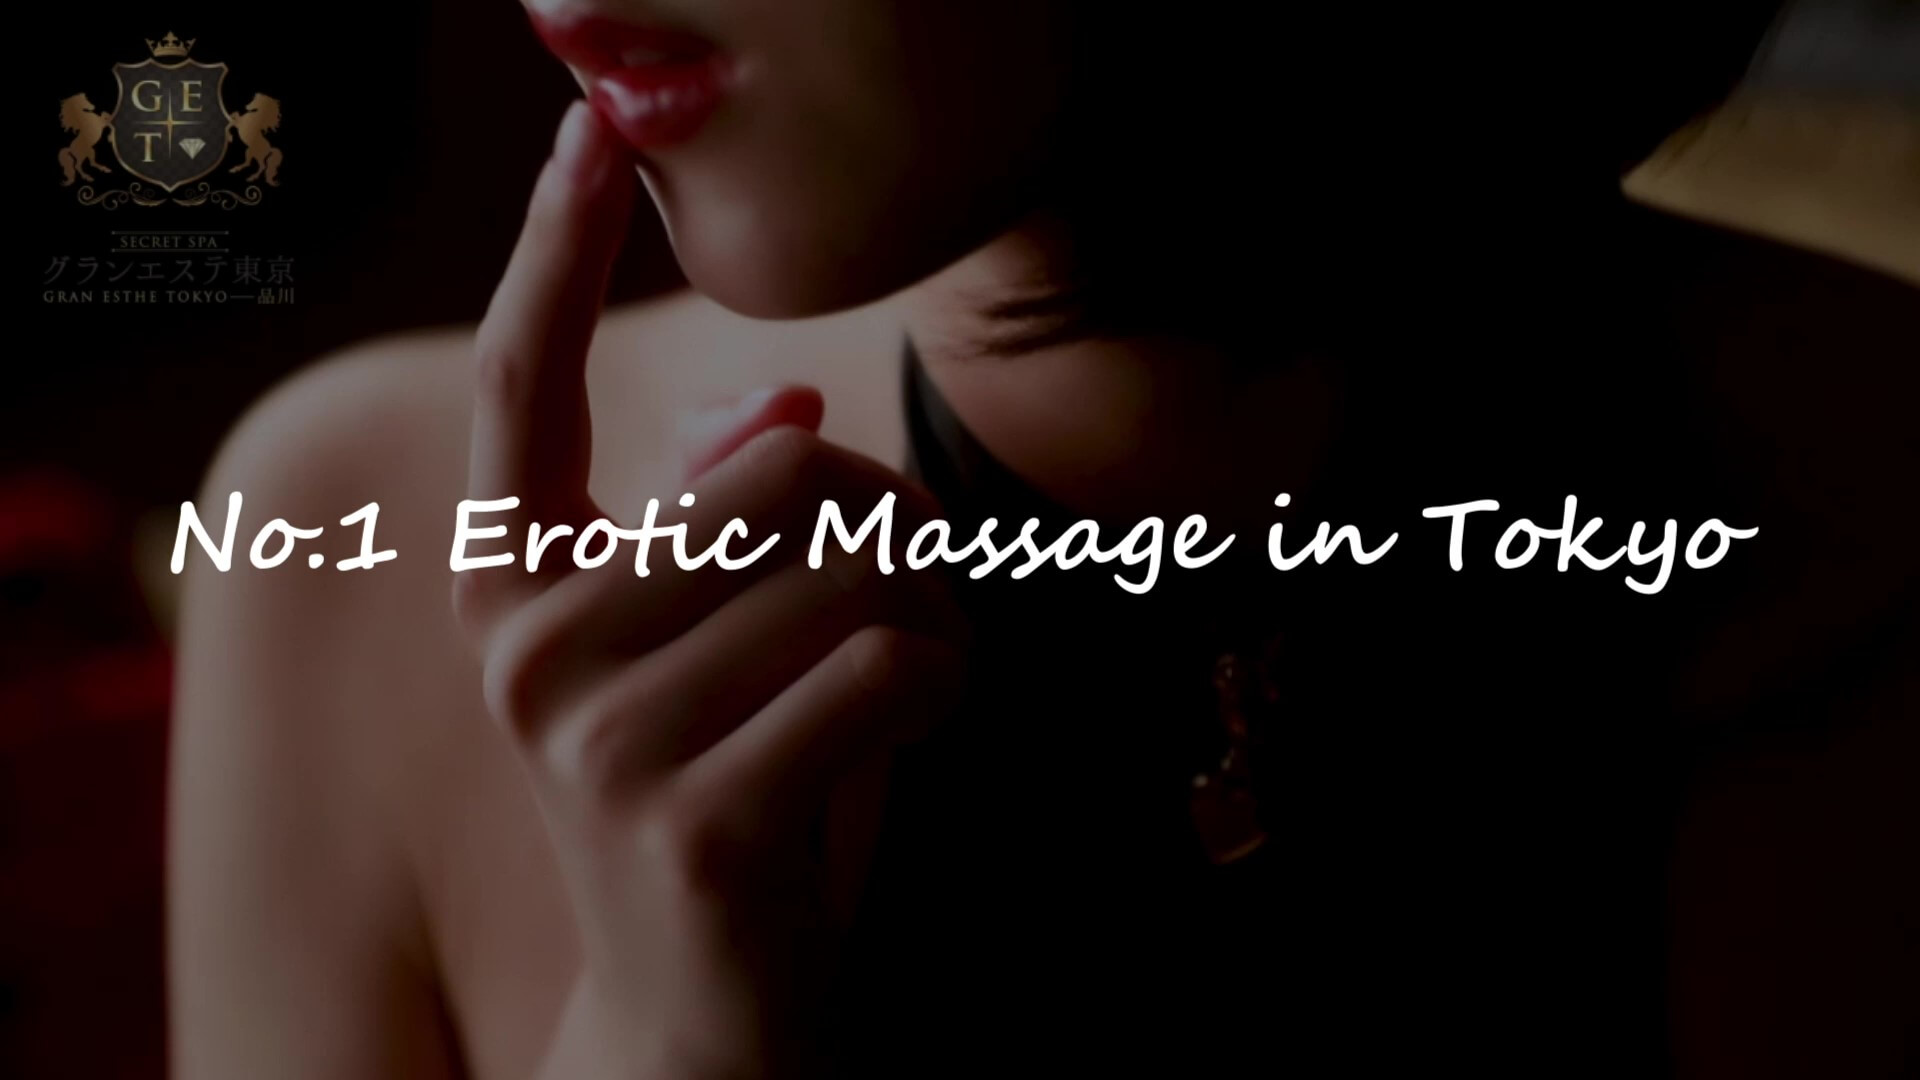 Gran Erotic Massage Tokyo Japanese Erotic, Nuru, Happyending Massage Services photo picture